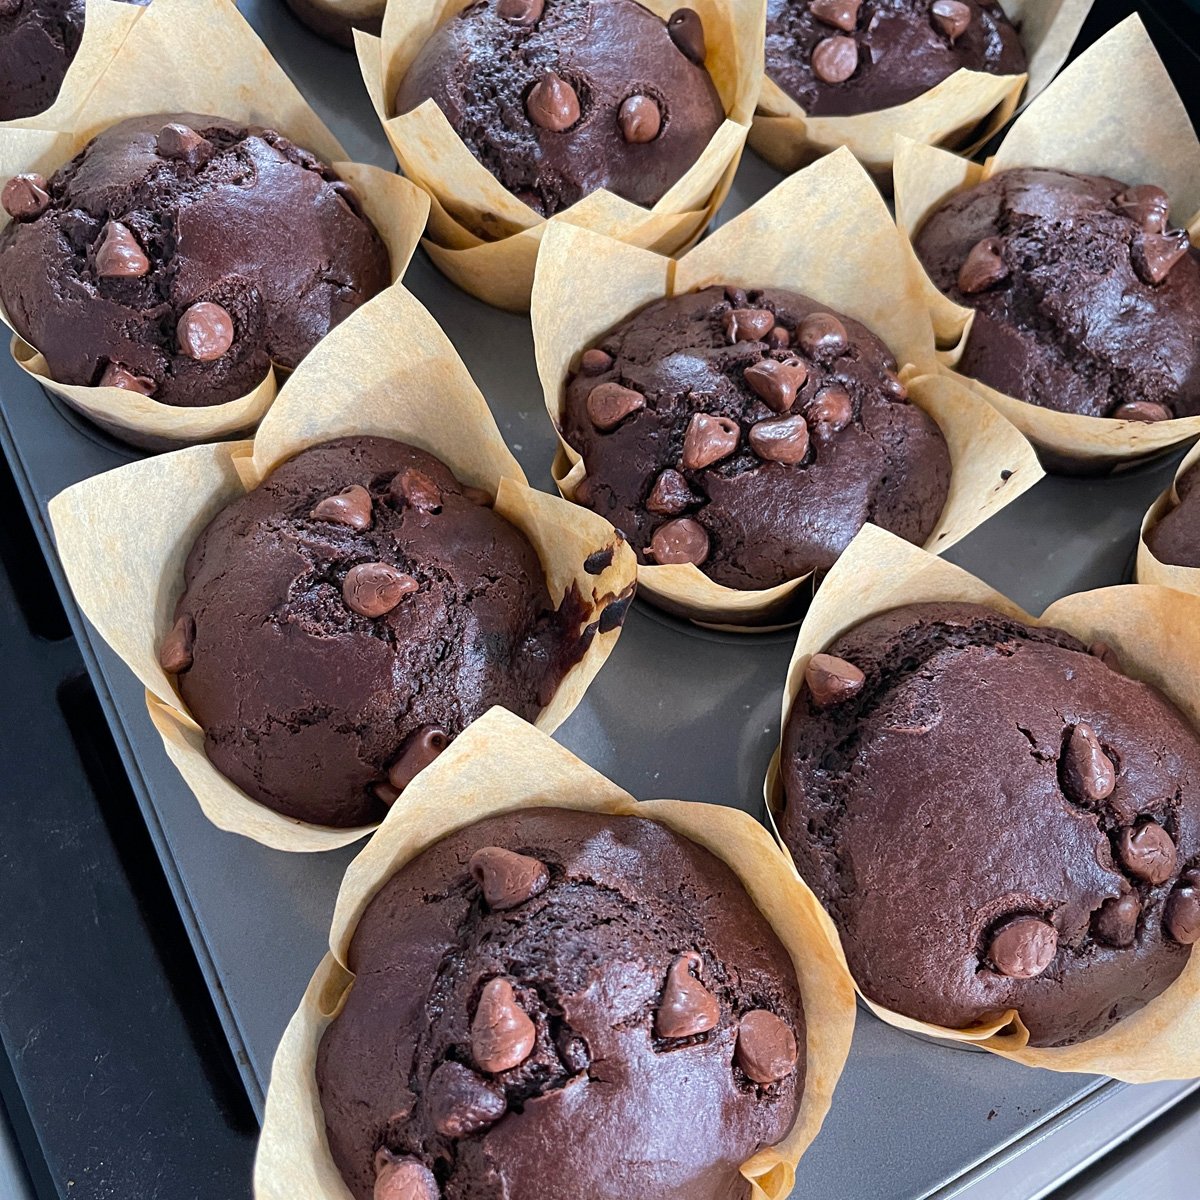 Chocolate chocolate chip muffins.